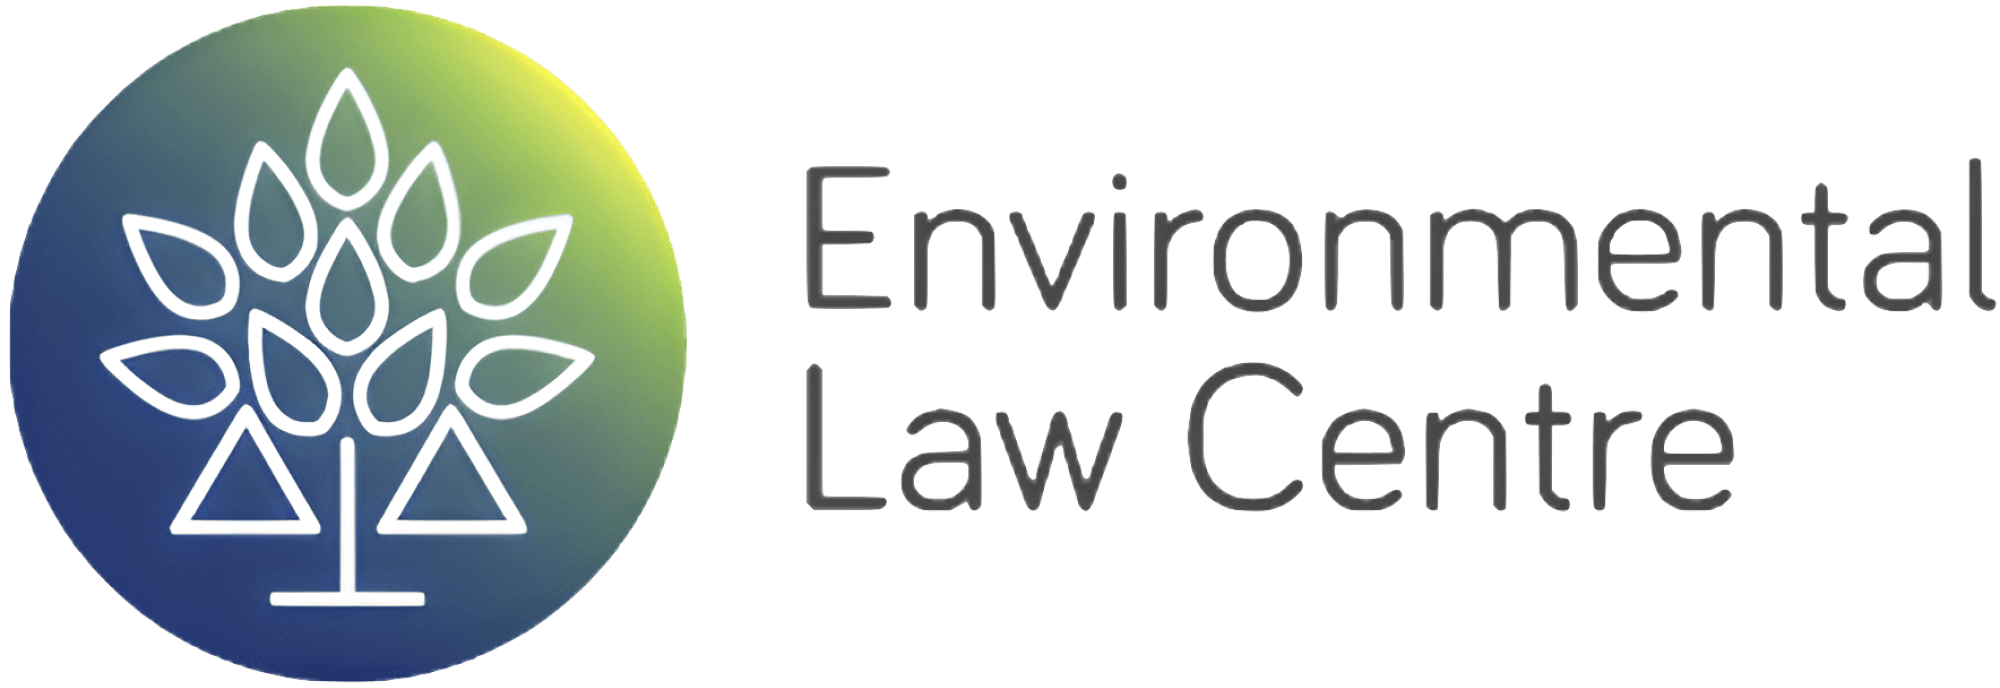 Environmental Law Centre logo on transparent background